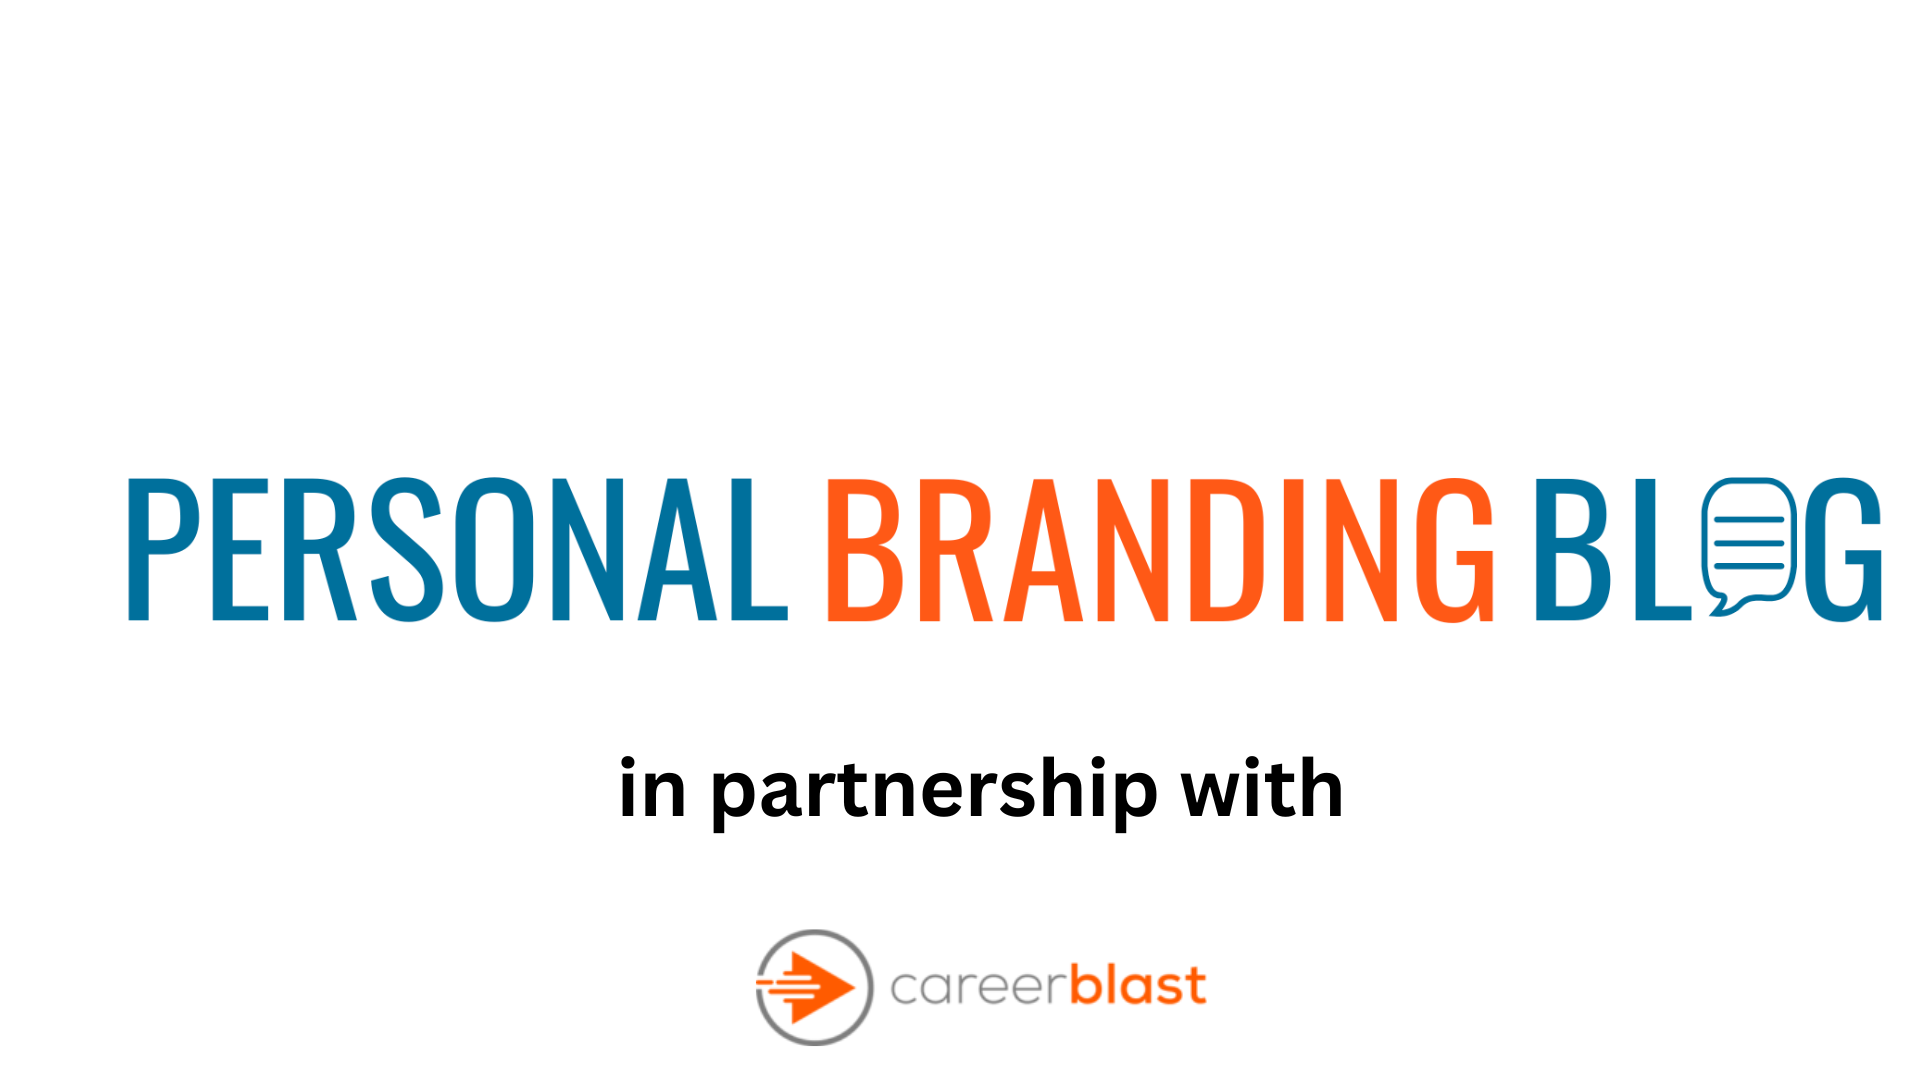 personalbrandingblog and careerblast